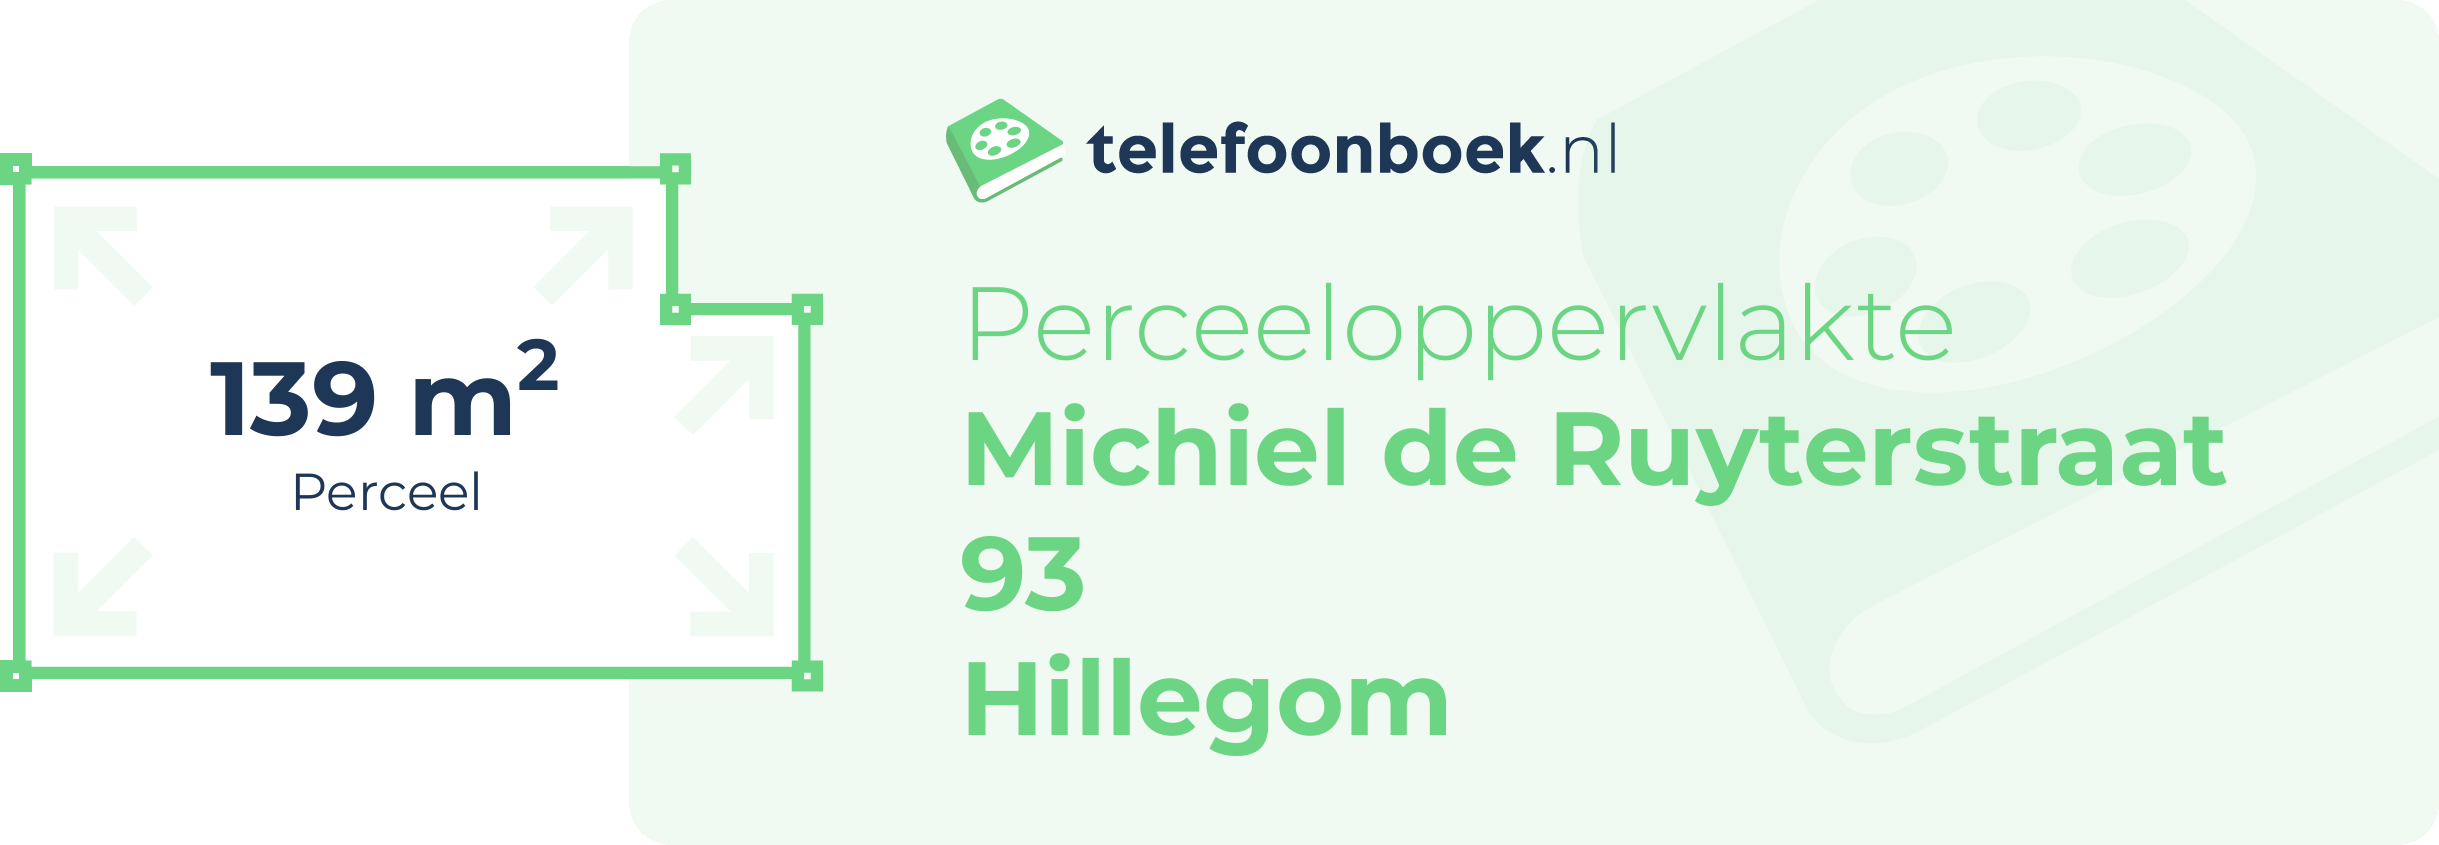 Perceeloppervlakte Michiel De Ruyterstraat 93 Hillegom